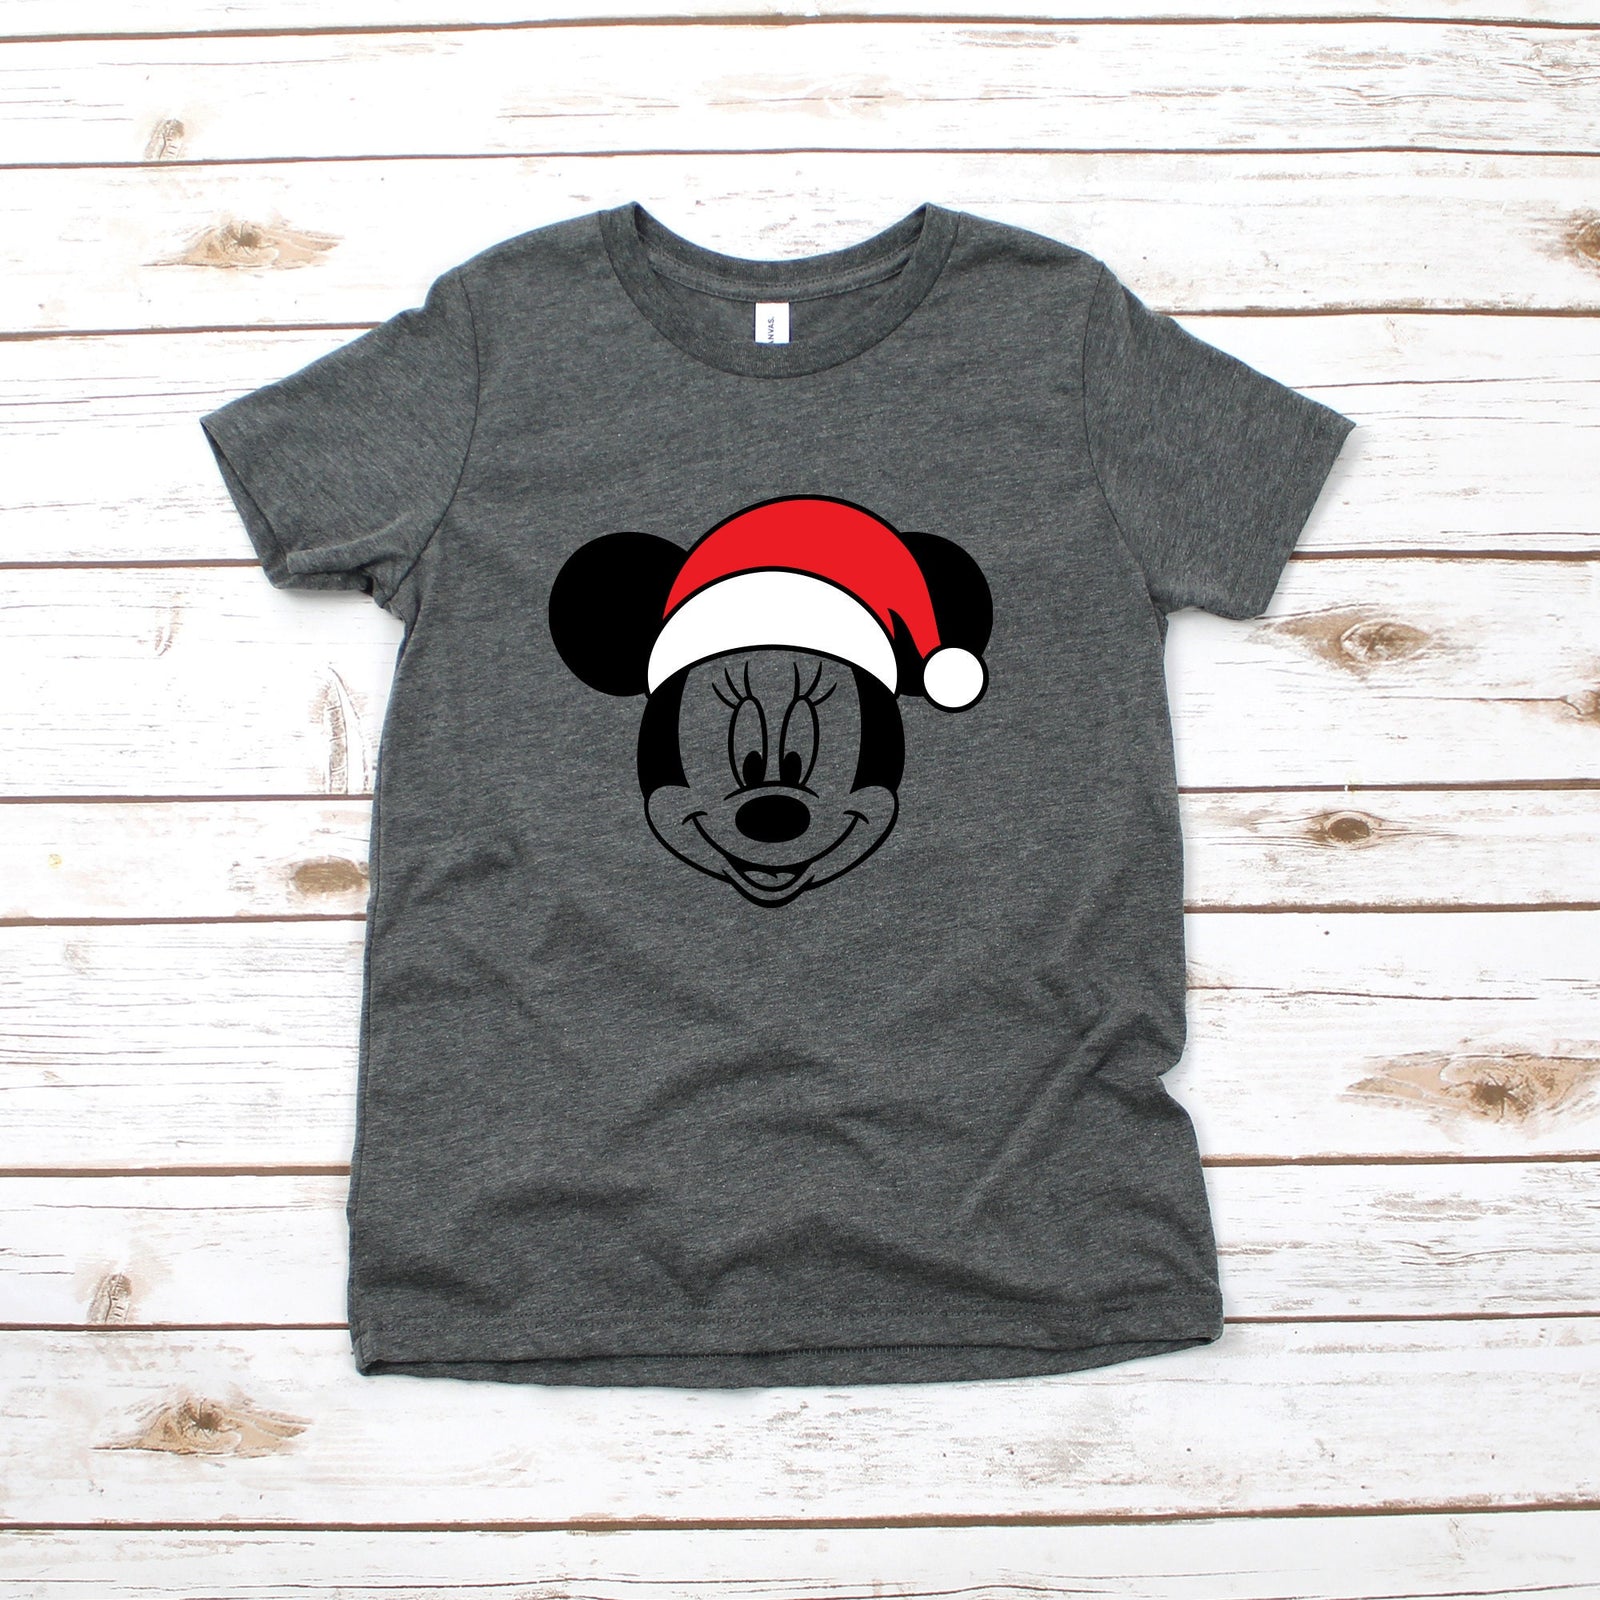 Santa Minnie Mouse - Aviator Sunglasses - Infant Toddler Youth Minnie Shirt - Disney Kids Shirts - Christmas Holiday Shirt